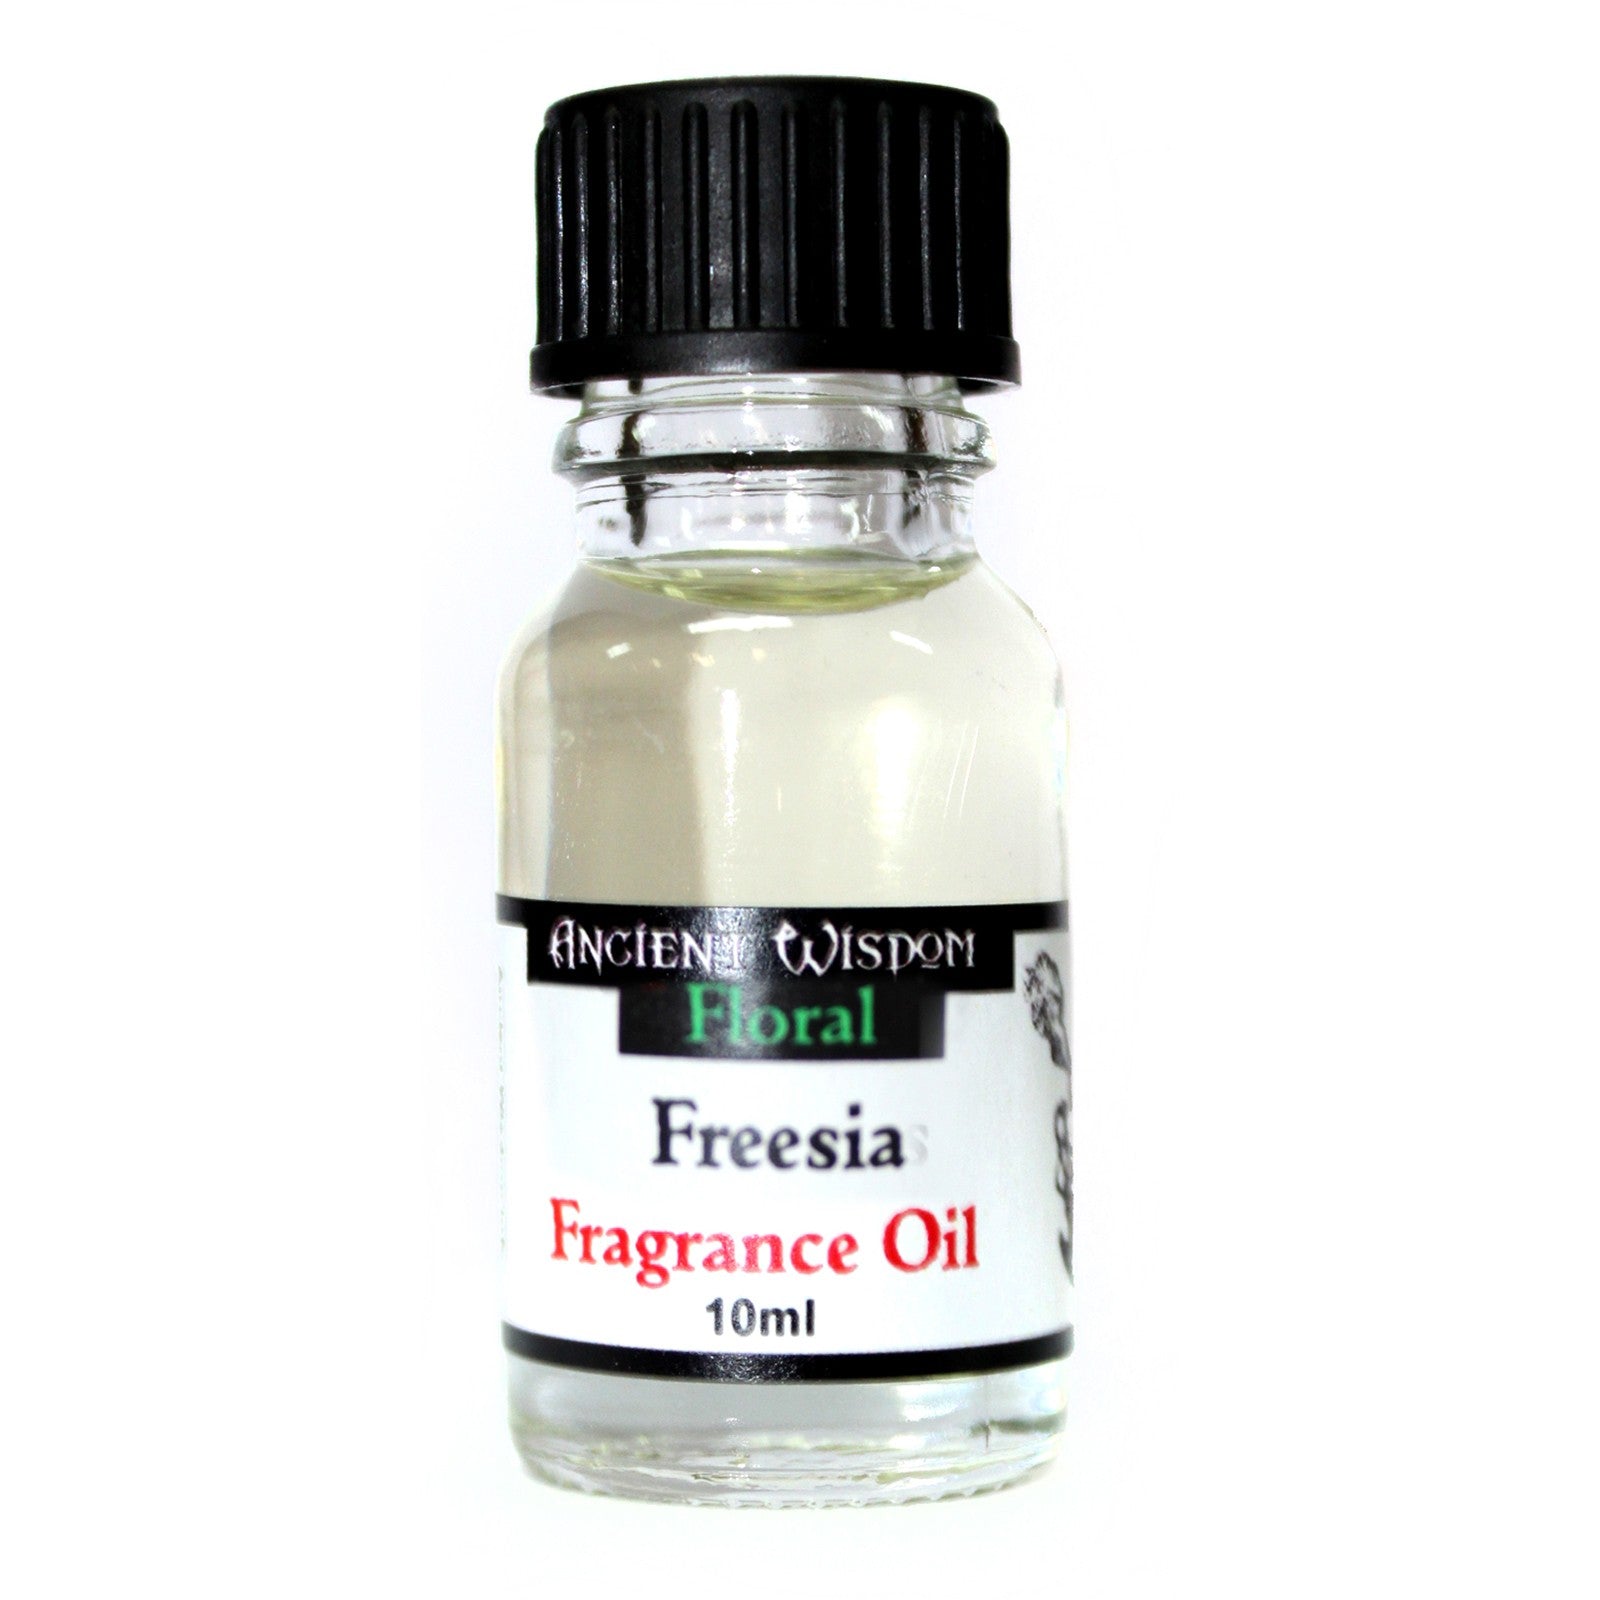 View 10ml Freesia Fragrance Oil information